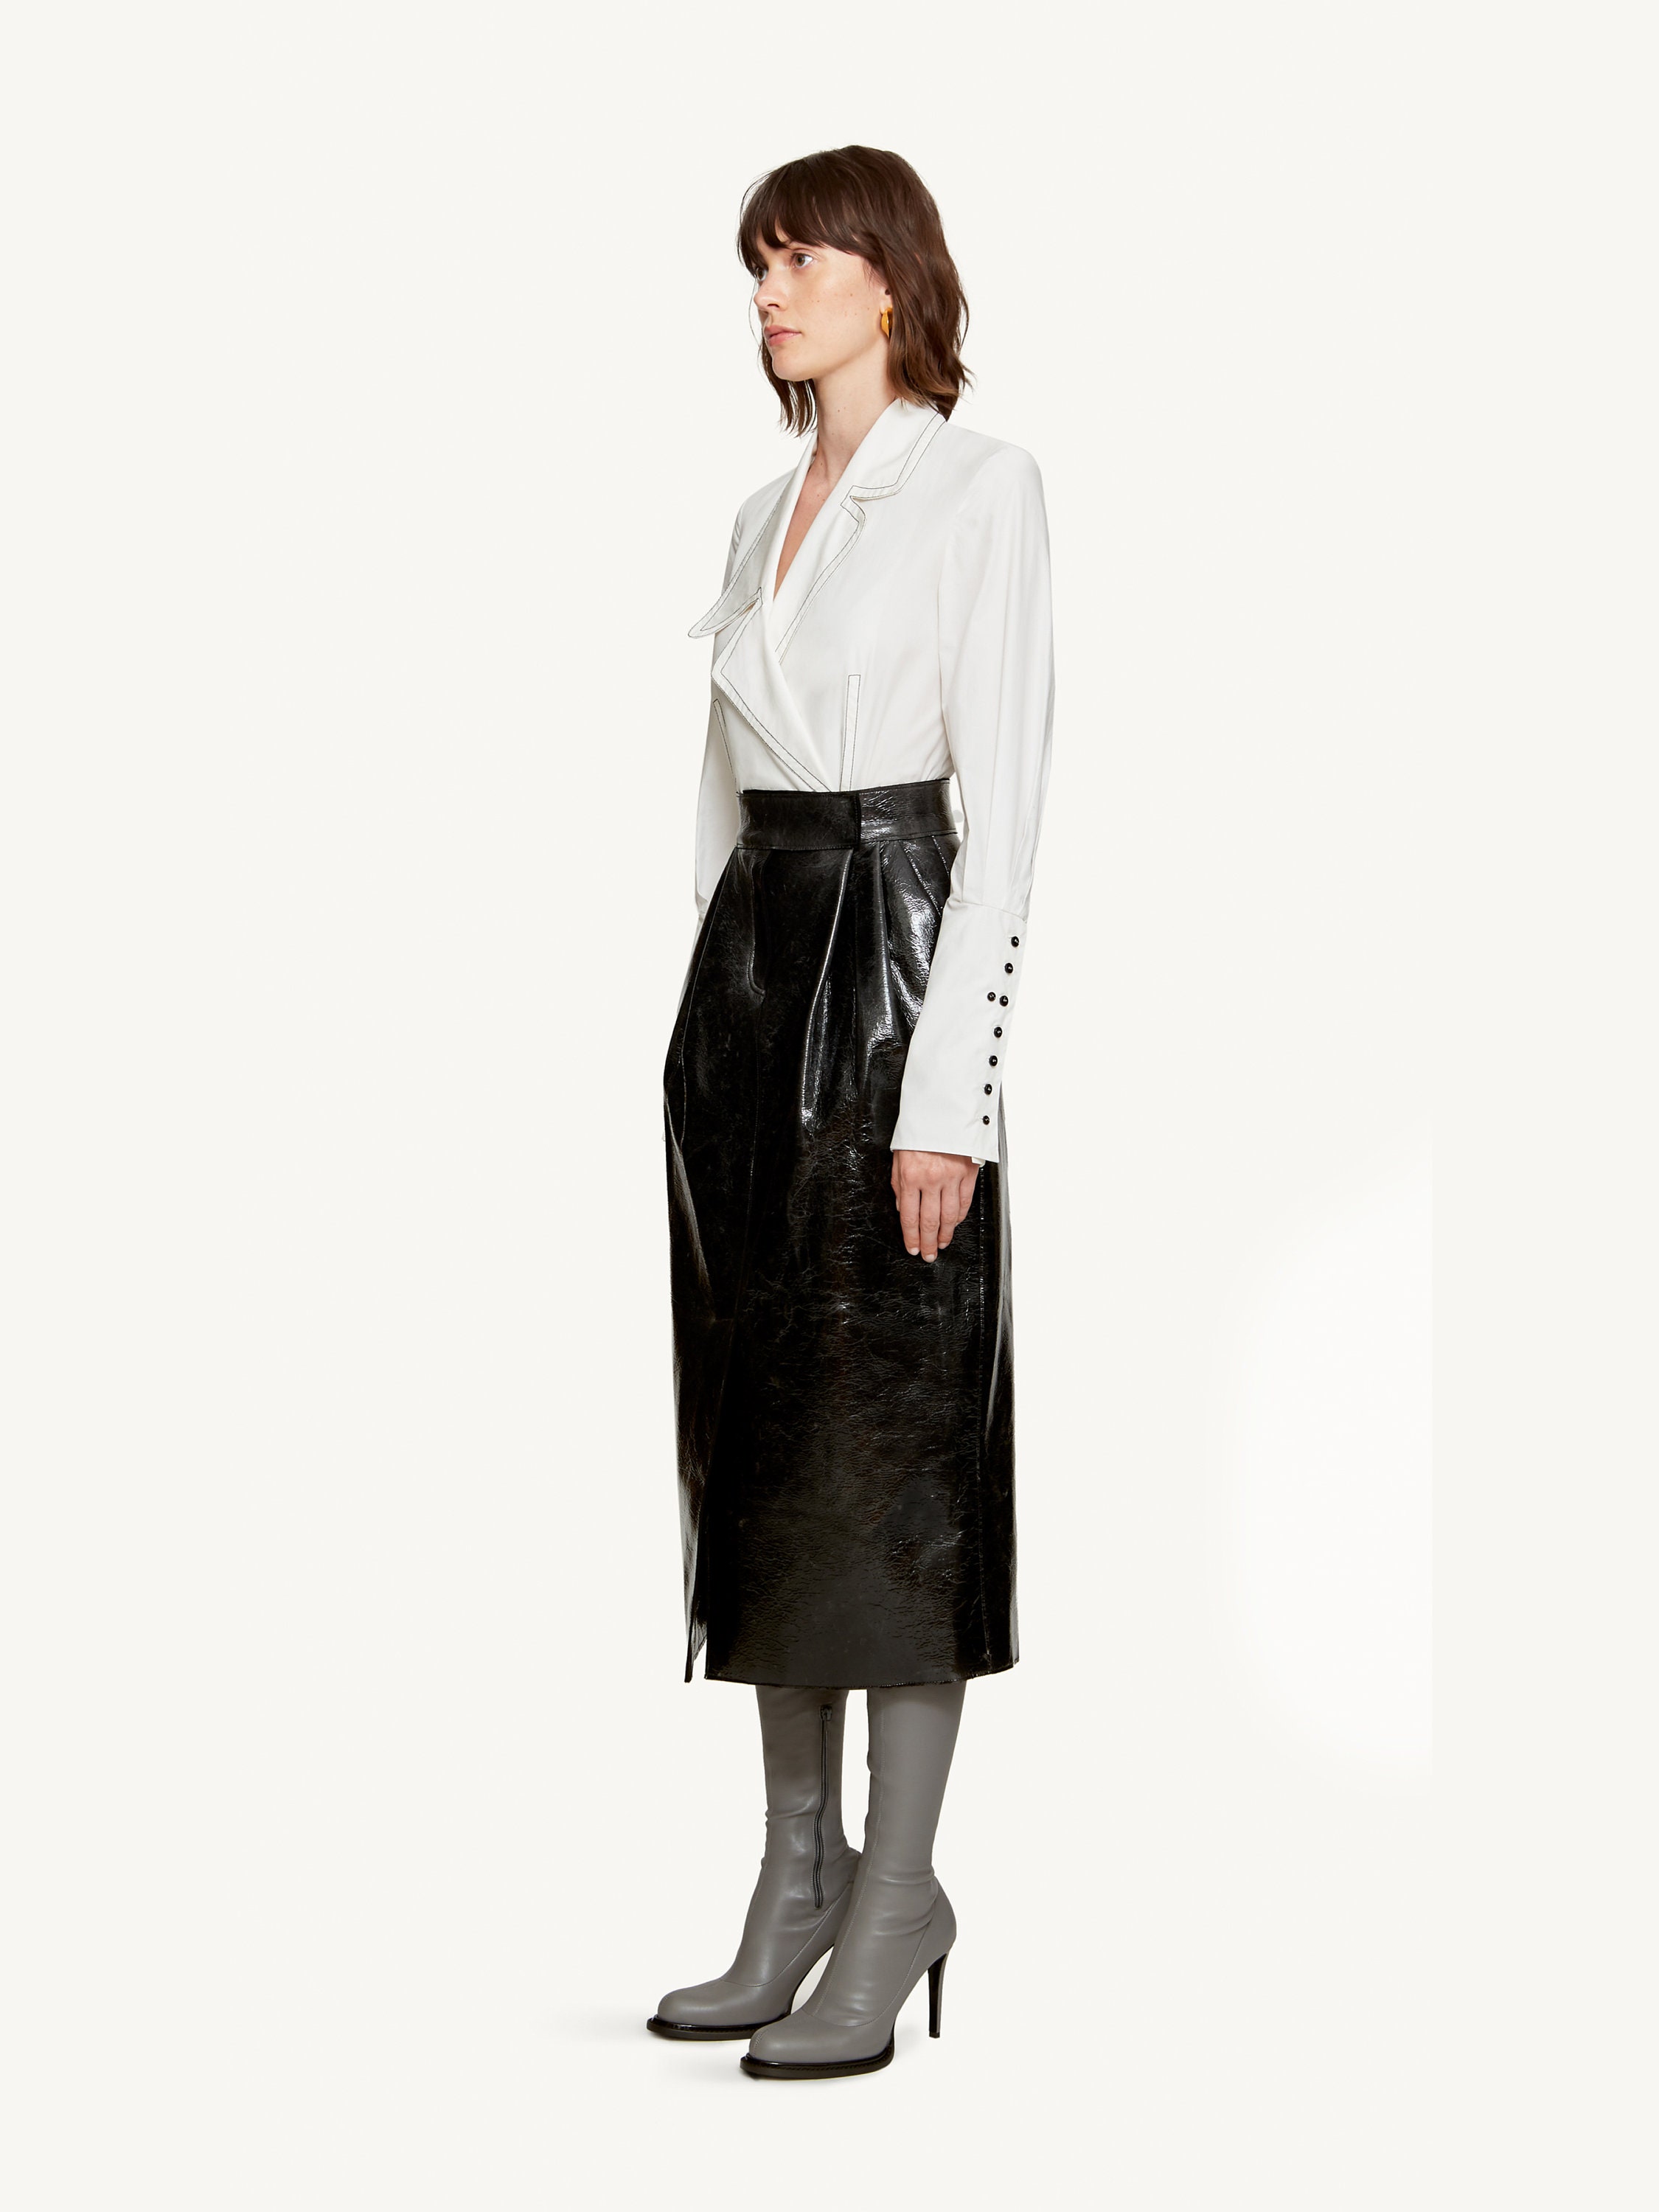 Patent Leather Midi Skirt / Women Fashion Skirt - Etsy